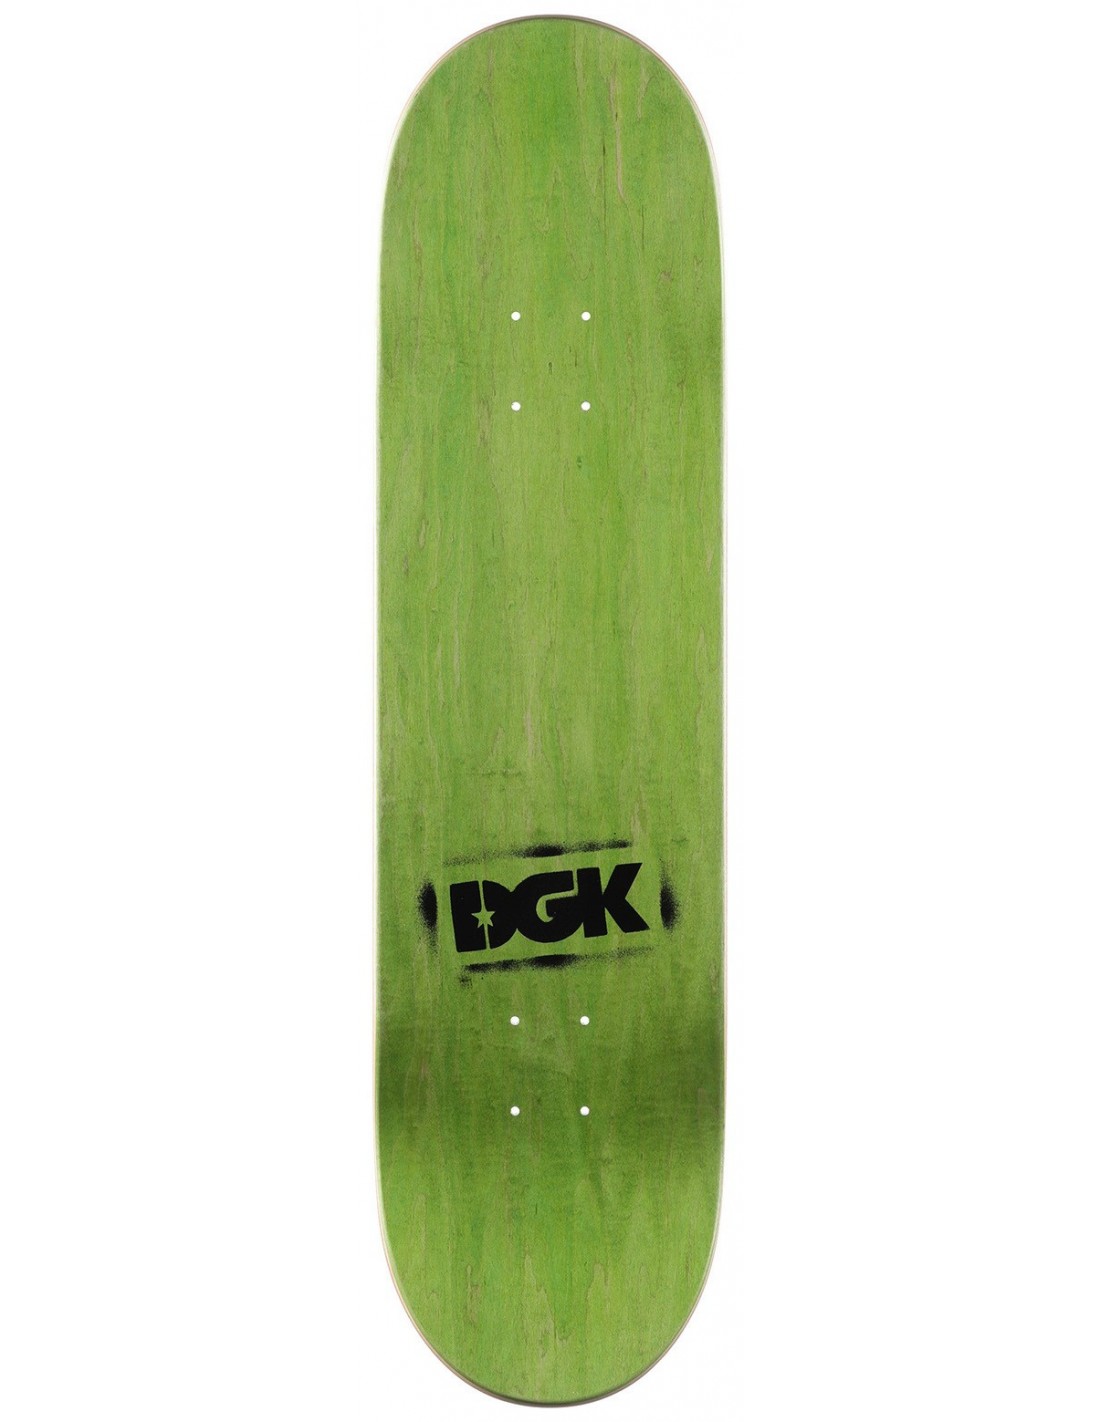 dgk skateboard decks